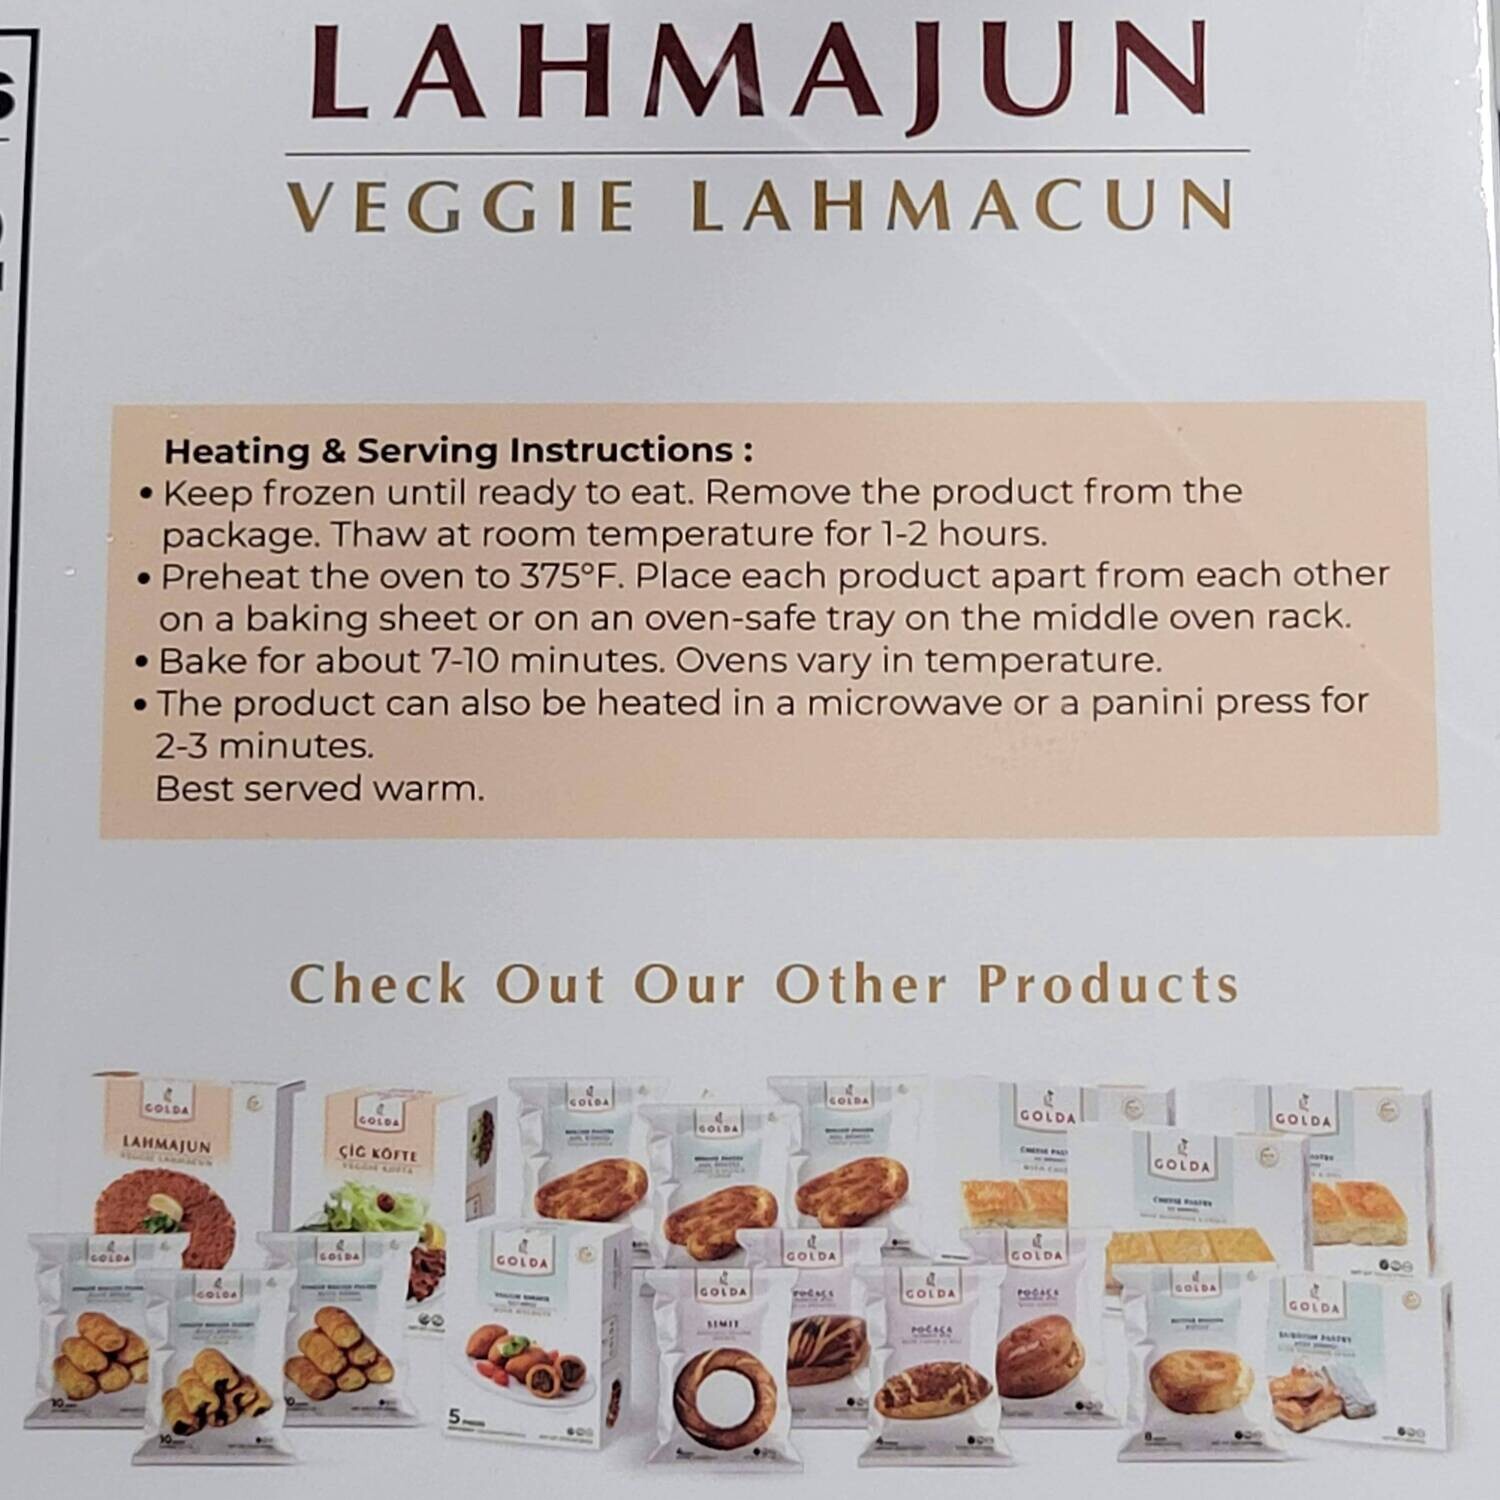 Veggie Lahmacun - Meatless Lahmacun - Lahmajun 4 pcs (Frozen)